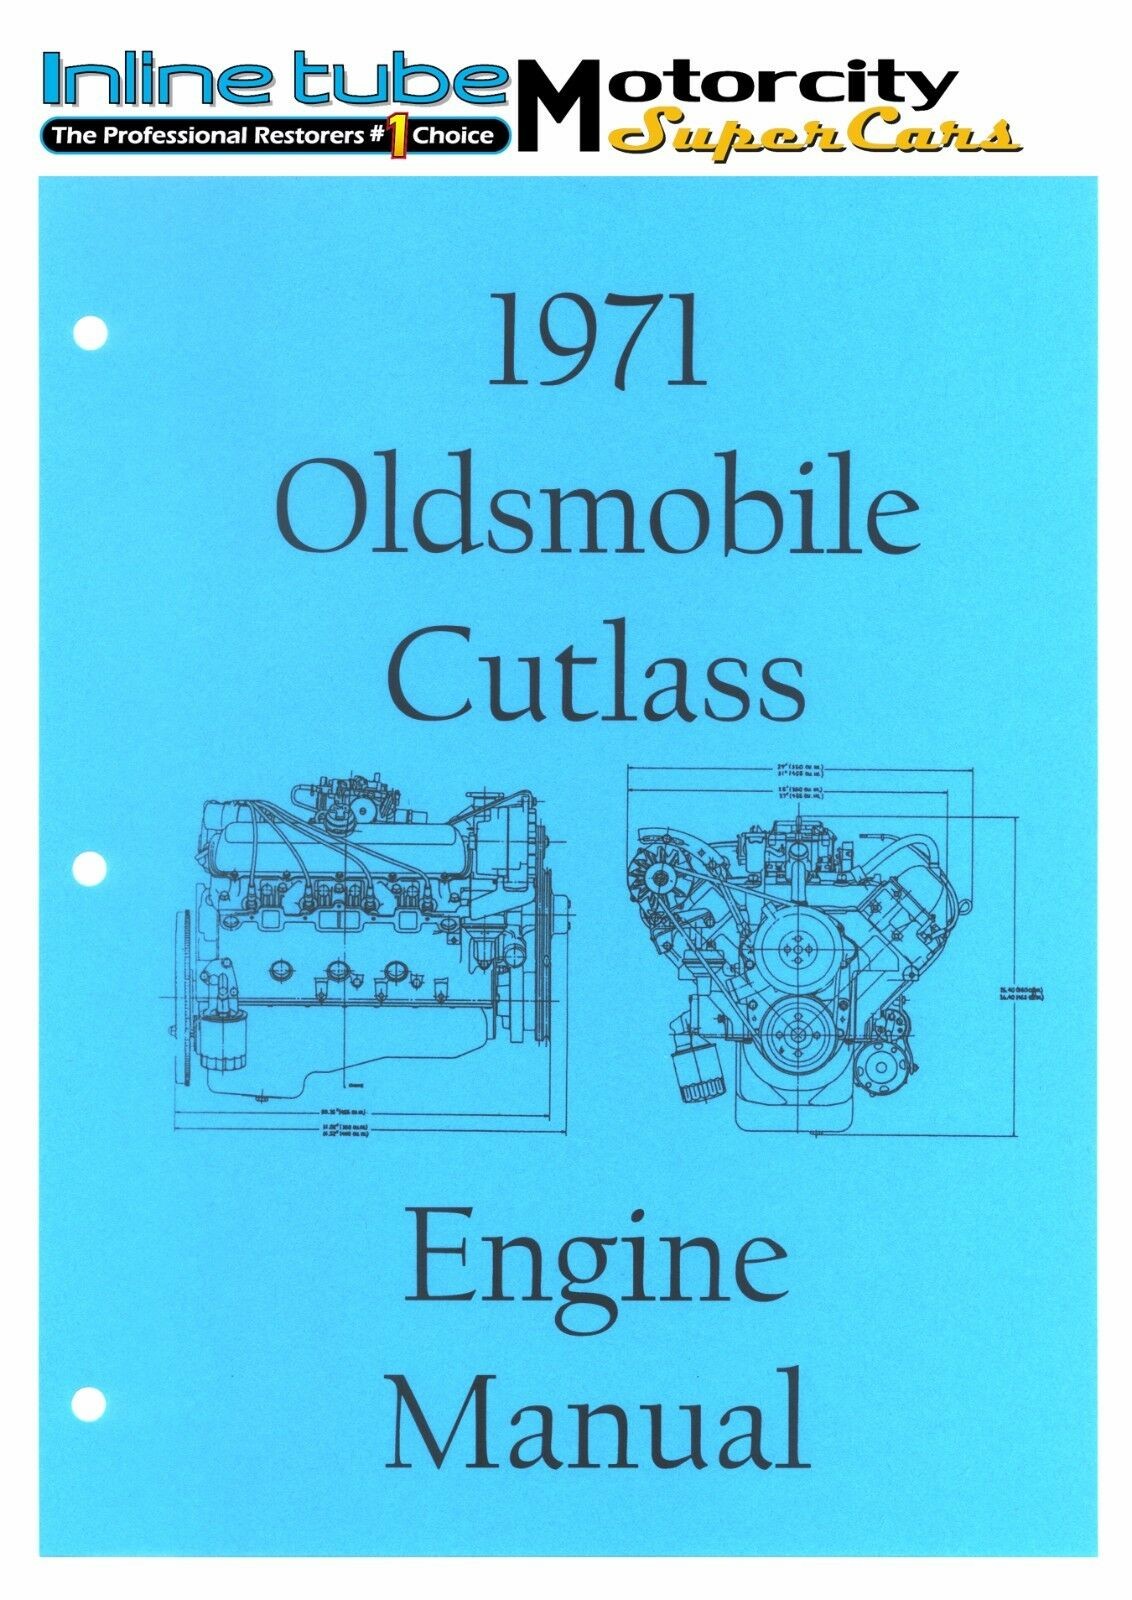 Wiring Diagram Of Distribuitor On 307 Oldmobile 1985 Oldsmobile 350 Engine Diagram Wiring Diagram Of Wiring Diagram Of Distribuitor On 307 Oldmobile 1985